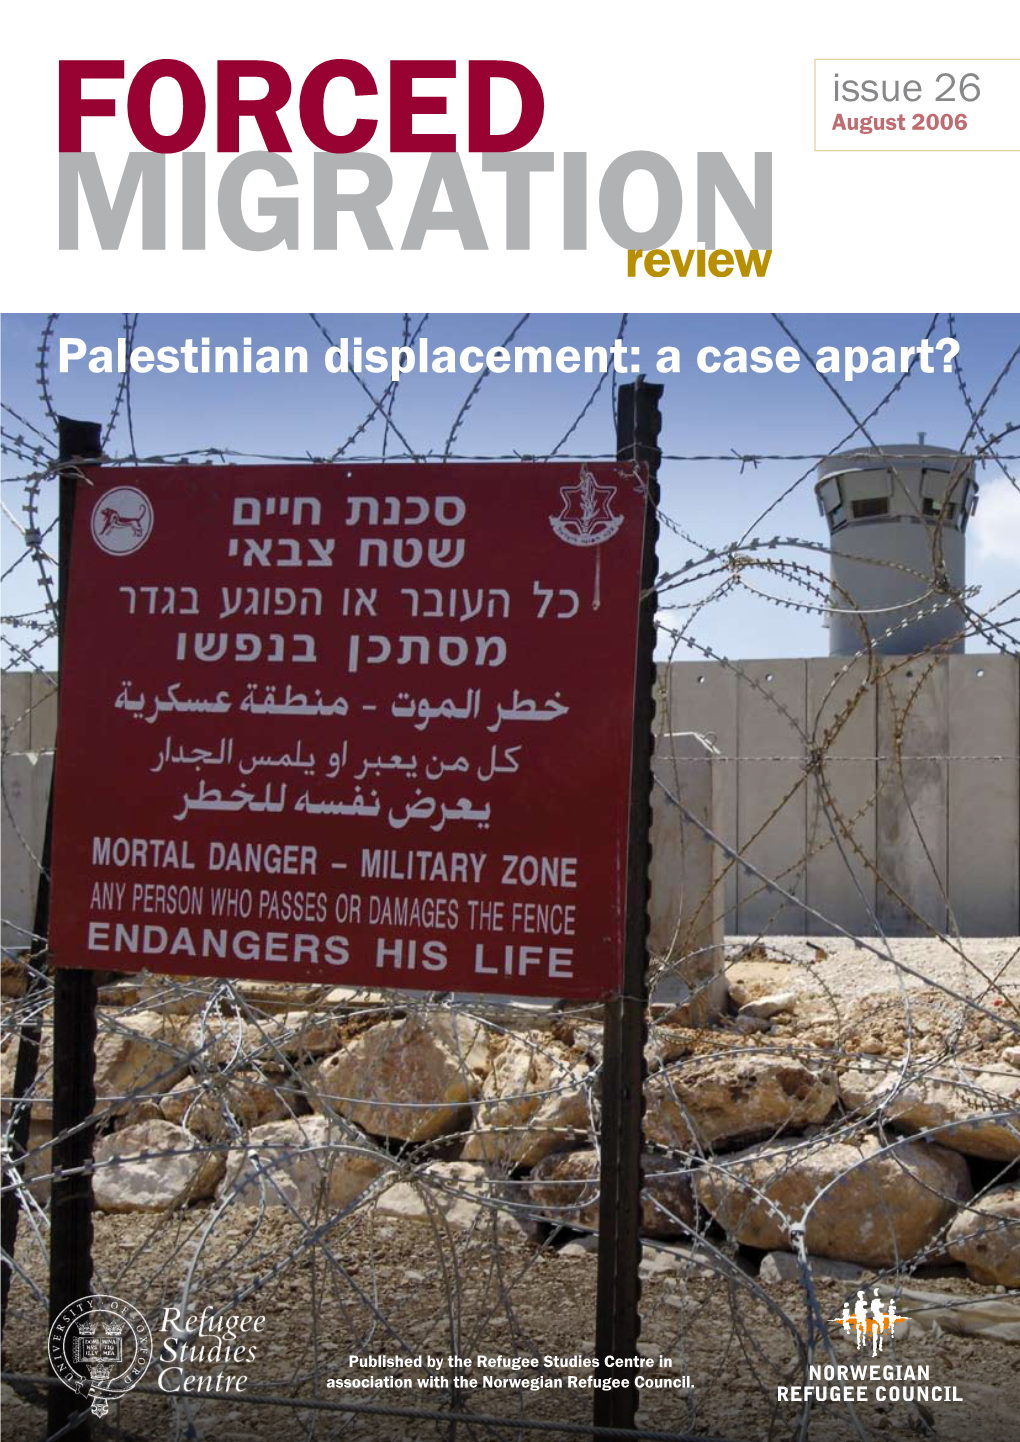 Palestinian Displacement: a Case Apart?